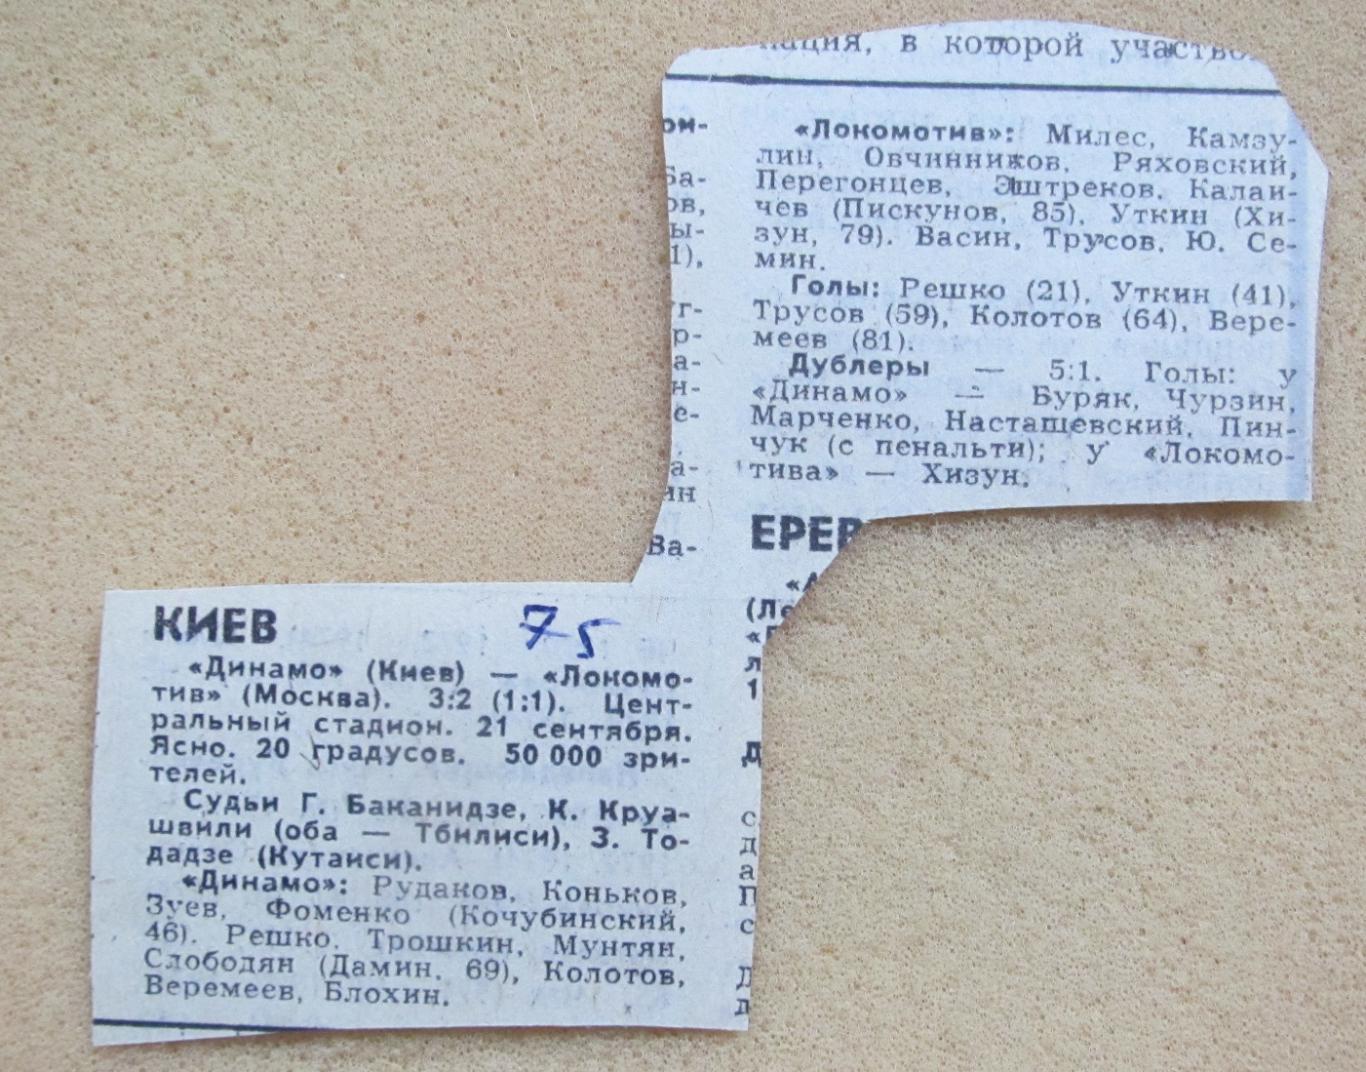 Динамо Киев - Локомотив Москва 21.09.1975